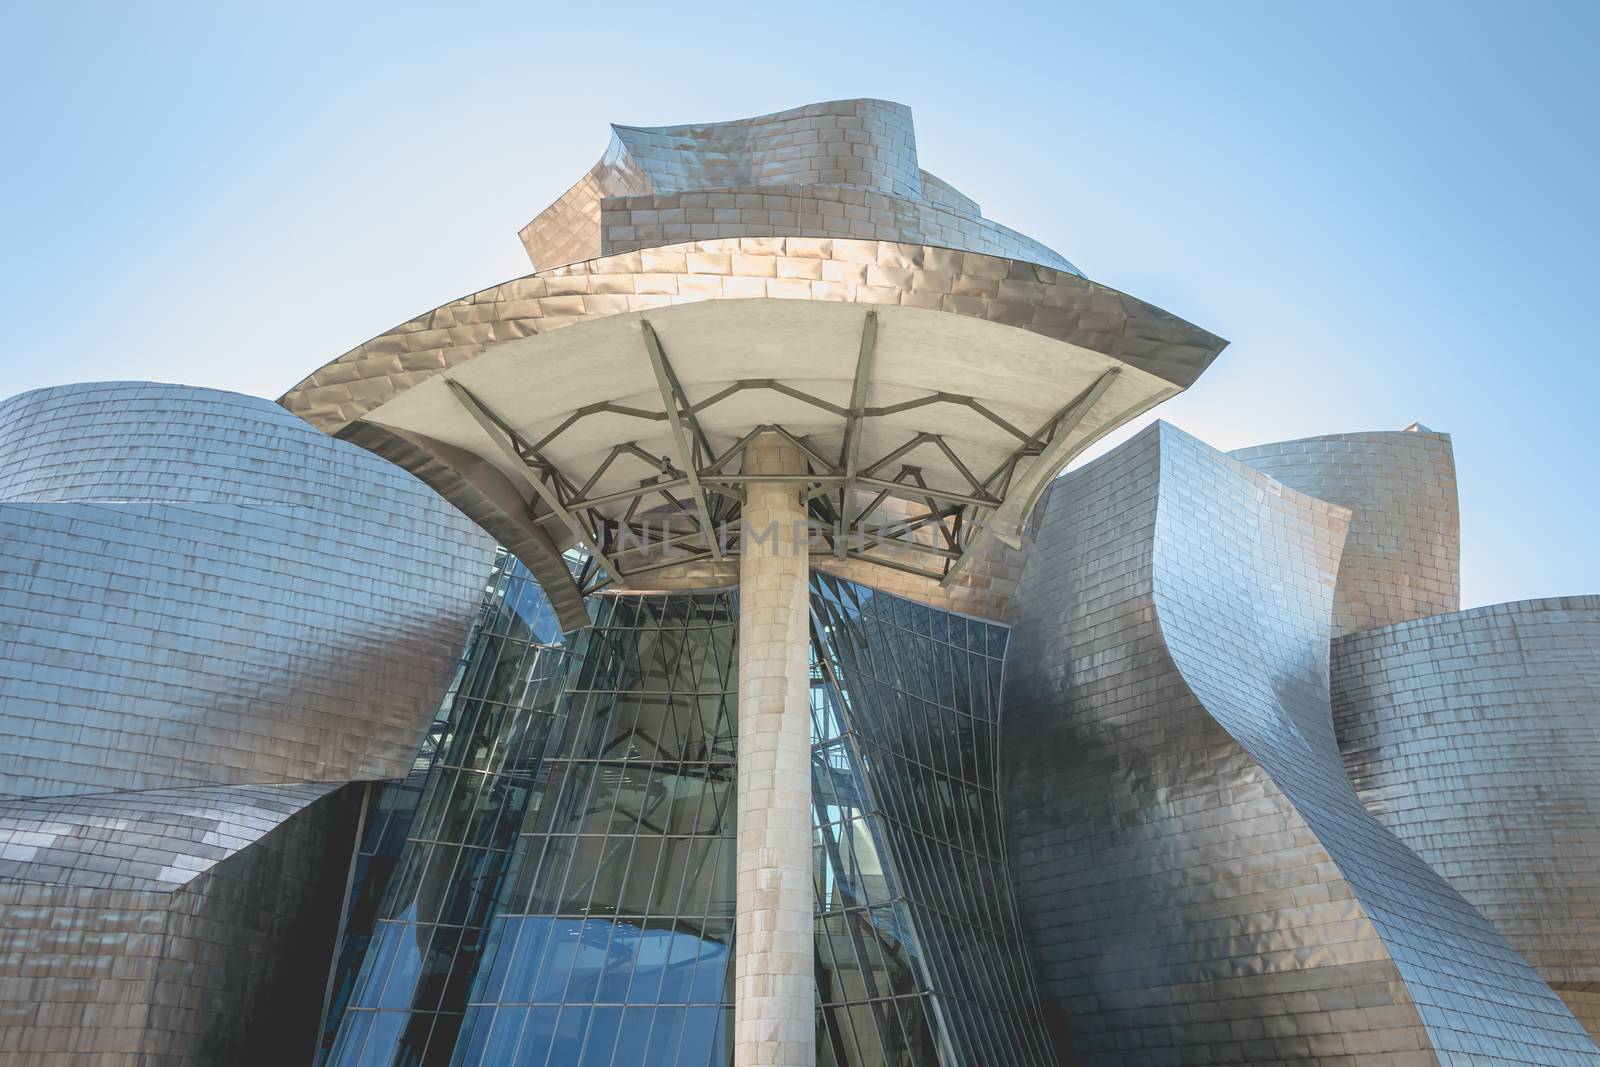 detail of the Guggenheim museum in Bilbao by AtlanticEUROSTOXX